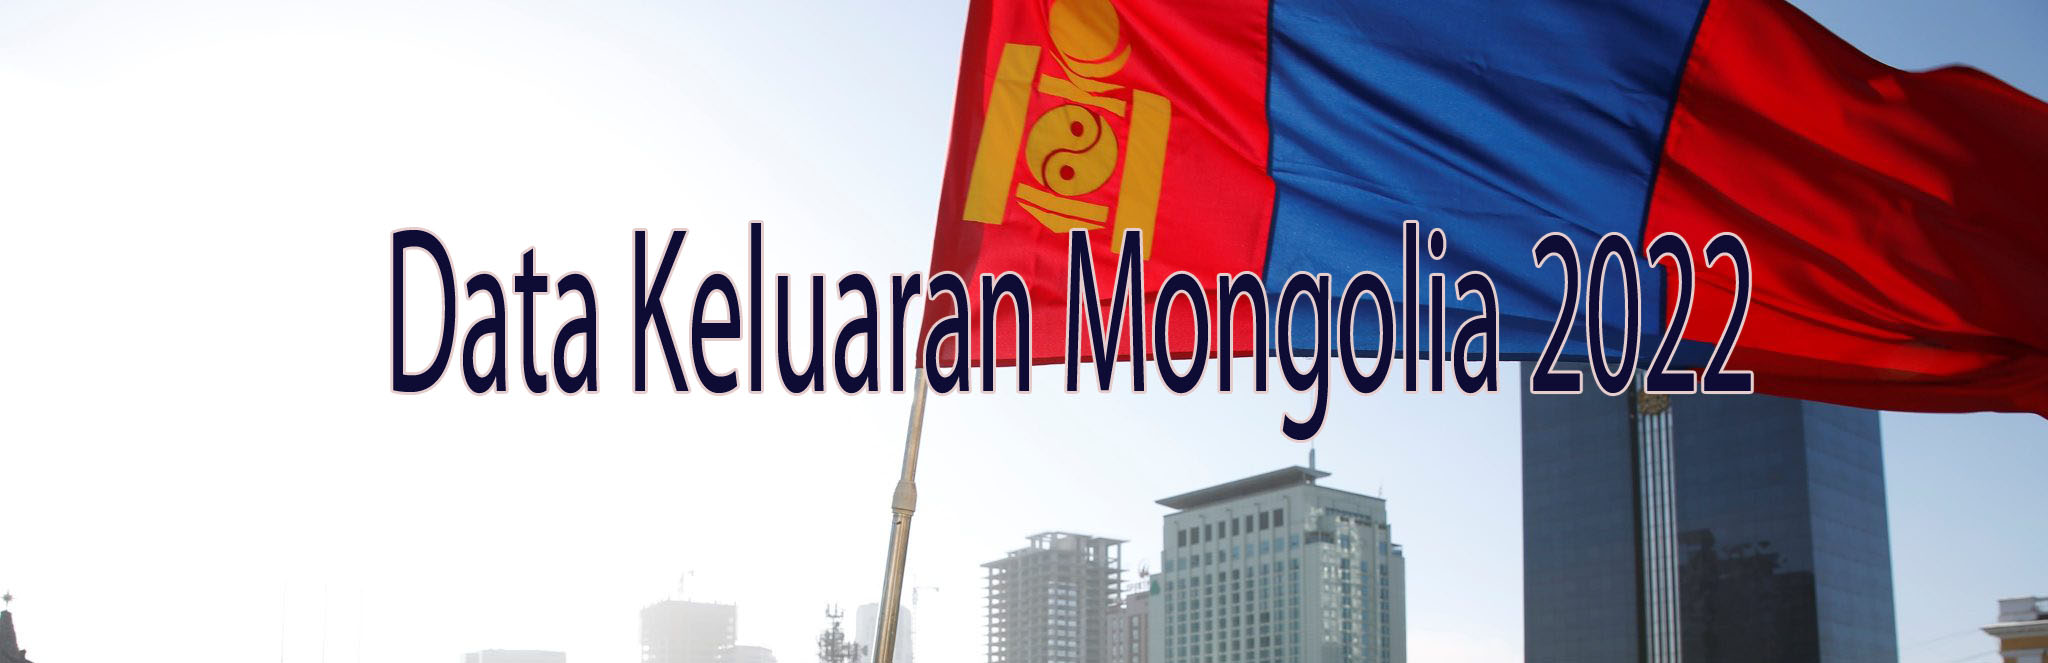 Data Keluaran Mongolia 2024